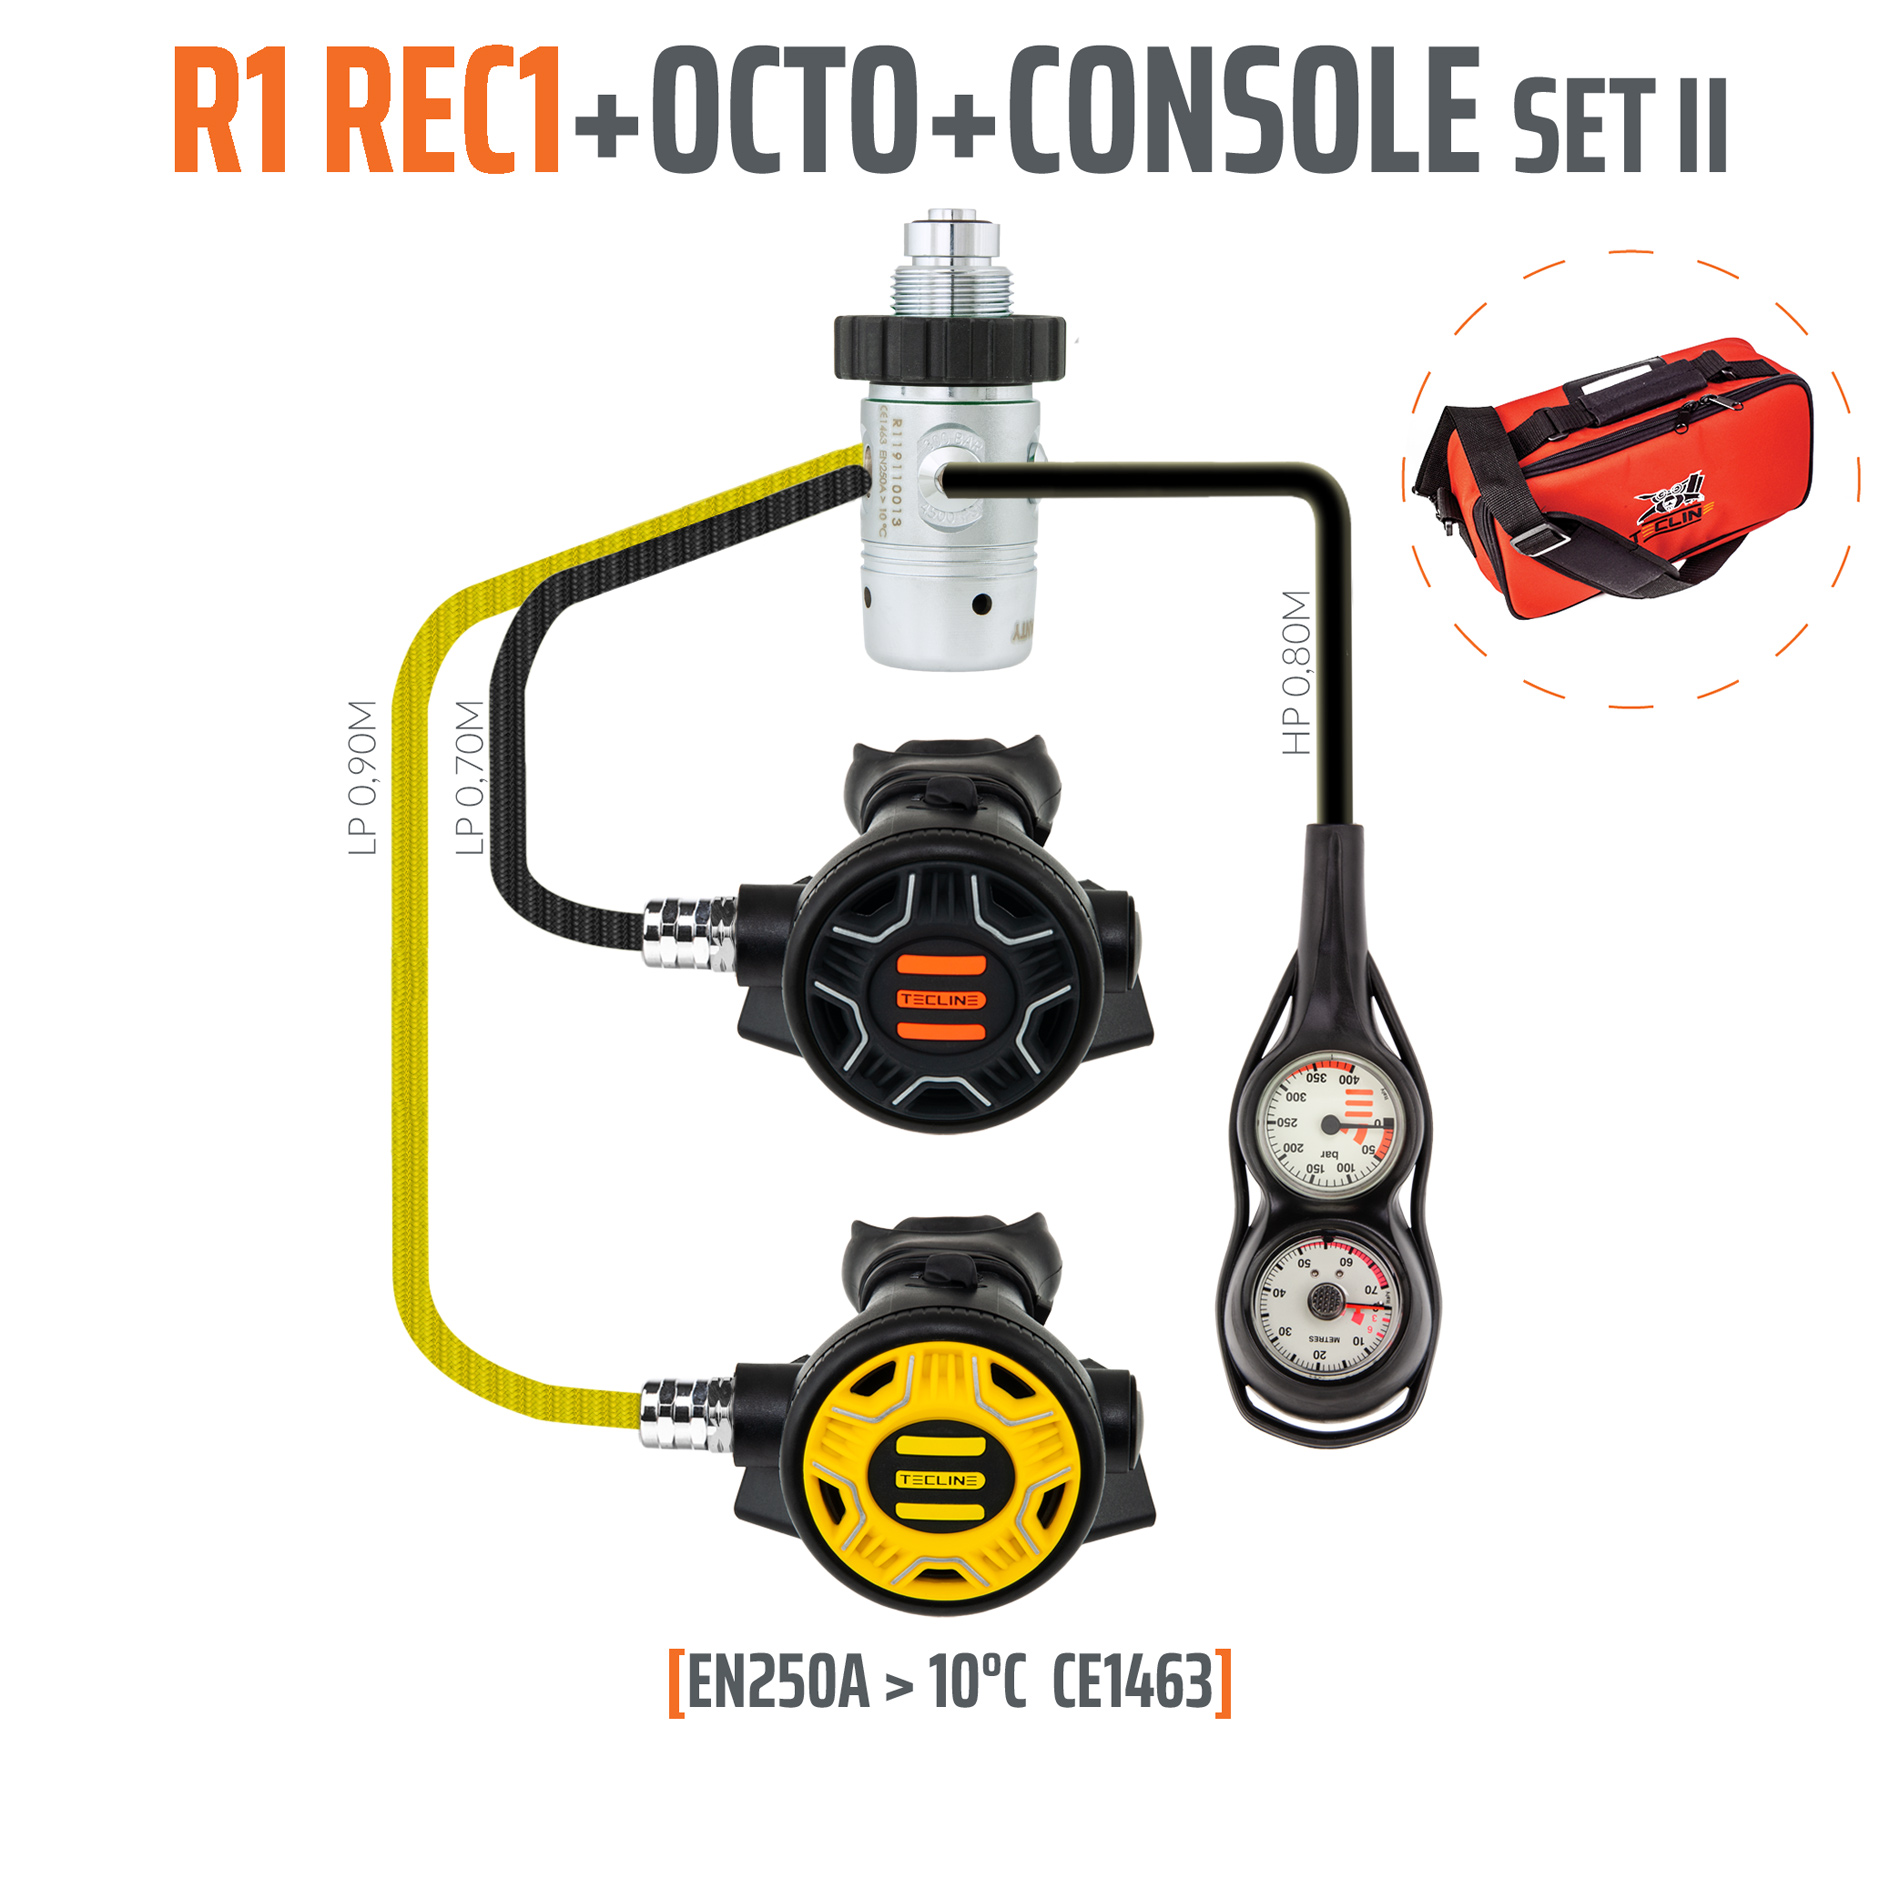 Tecline Regulator R1 REC1 set II with octo and 2 elements console – EN250A > 10°C